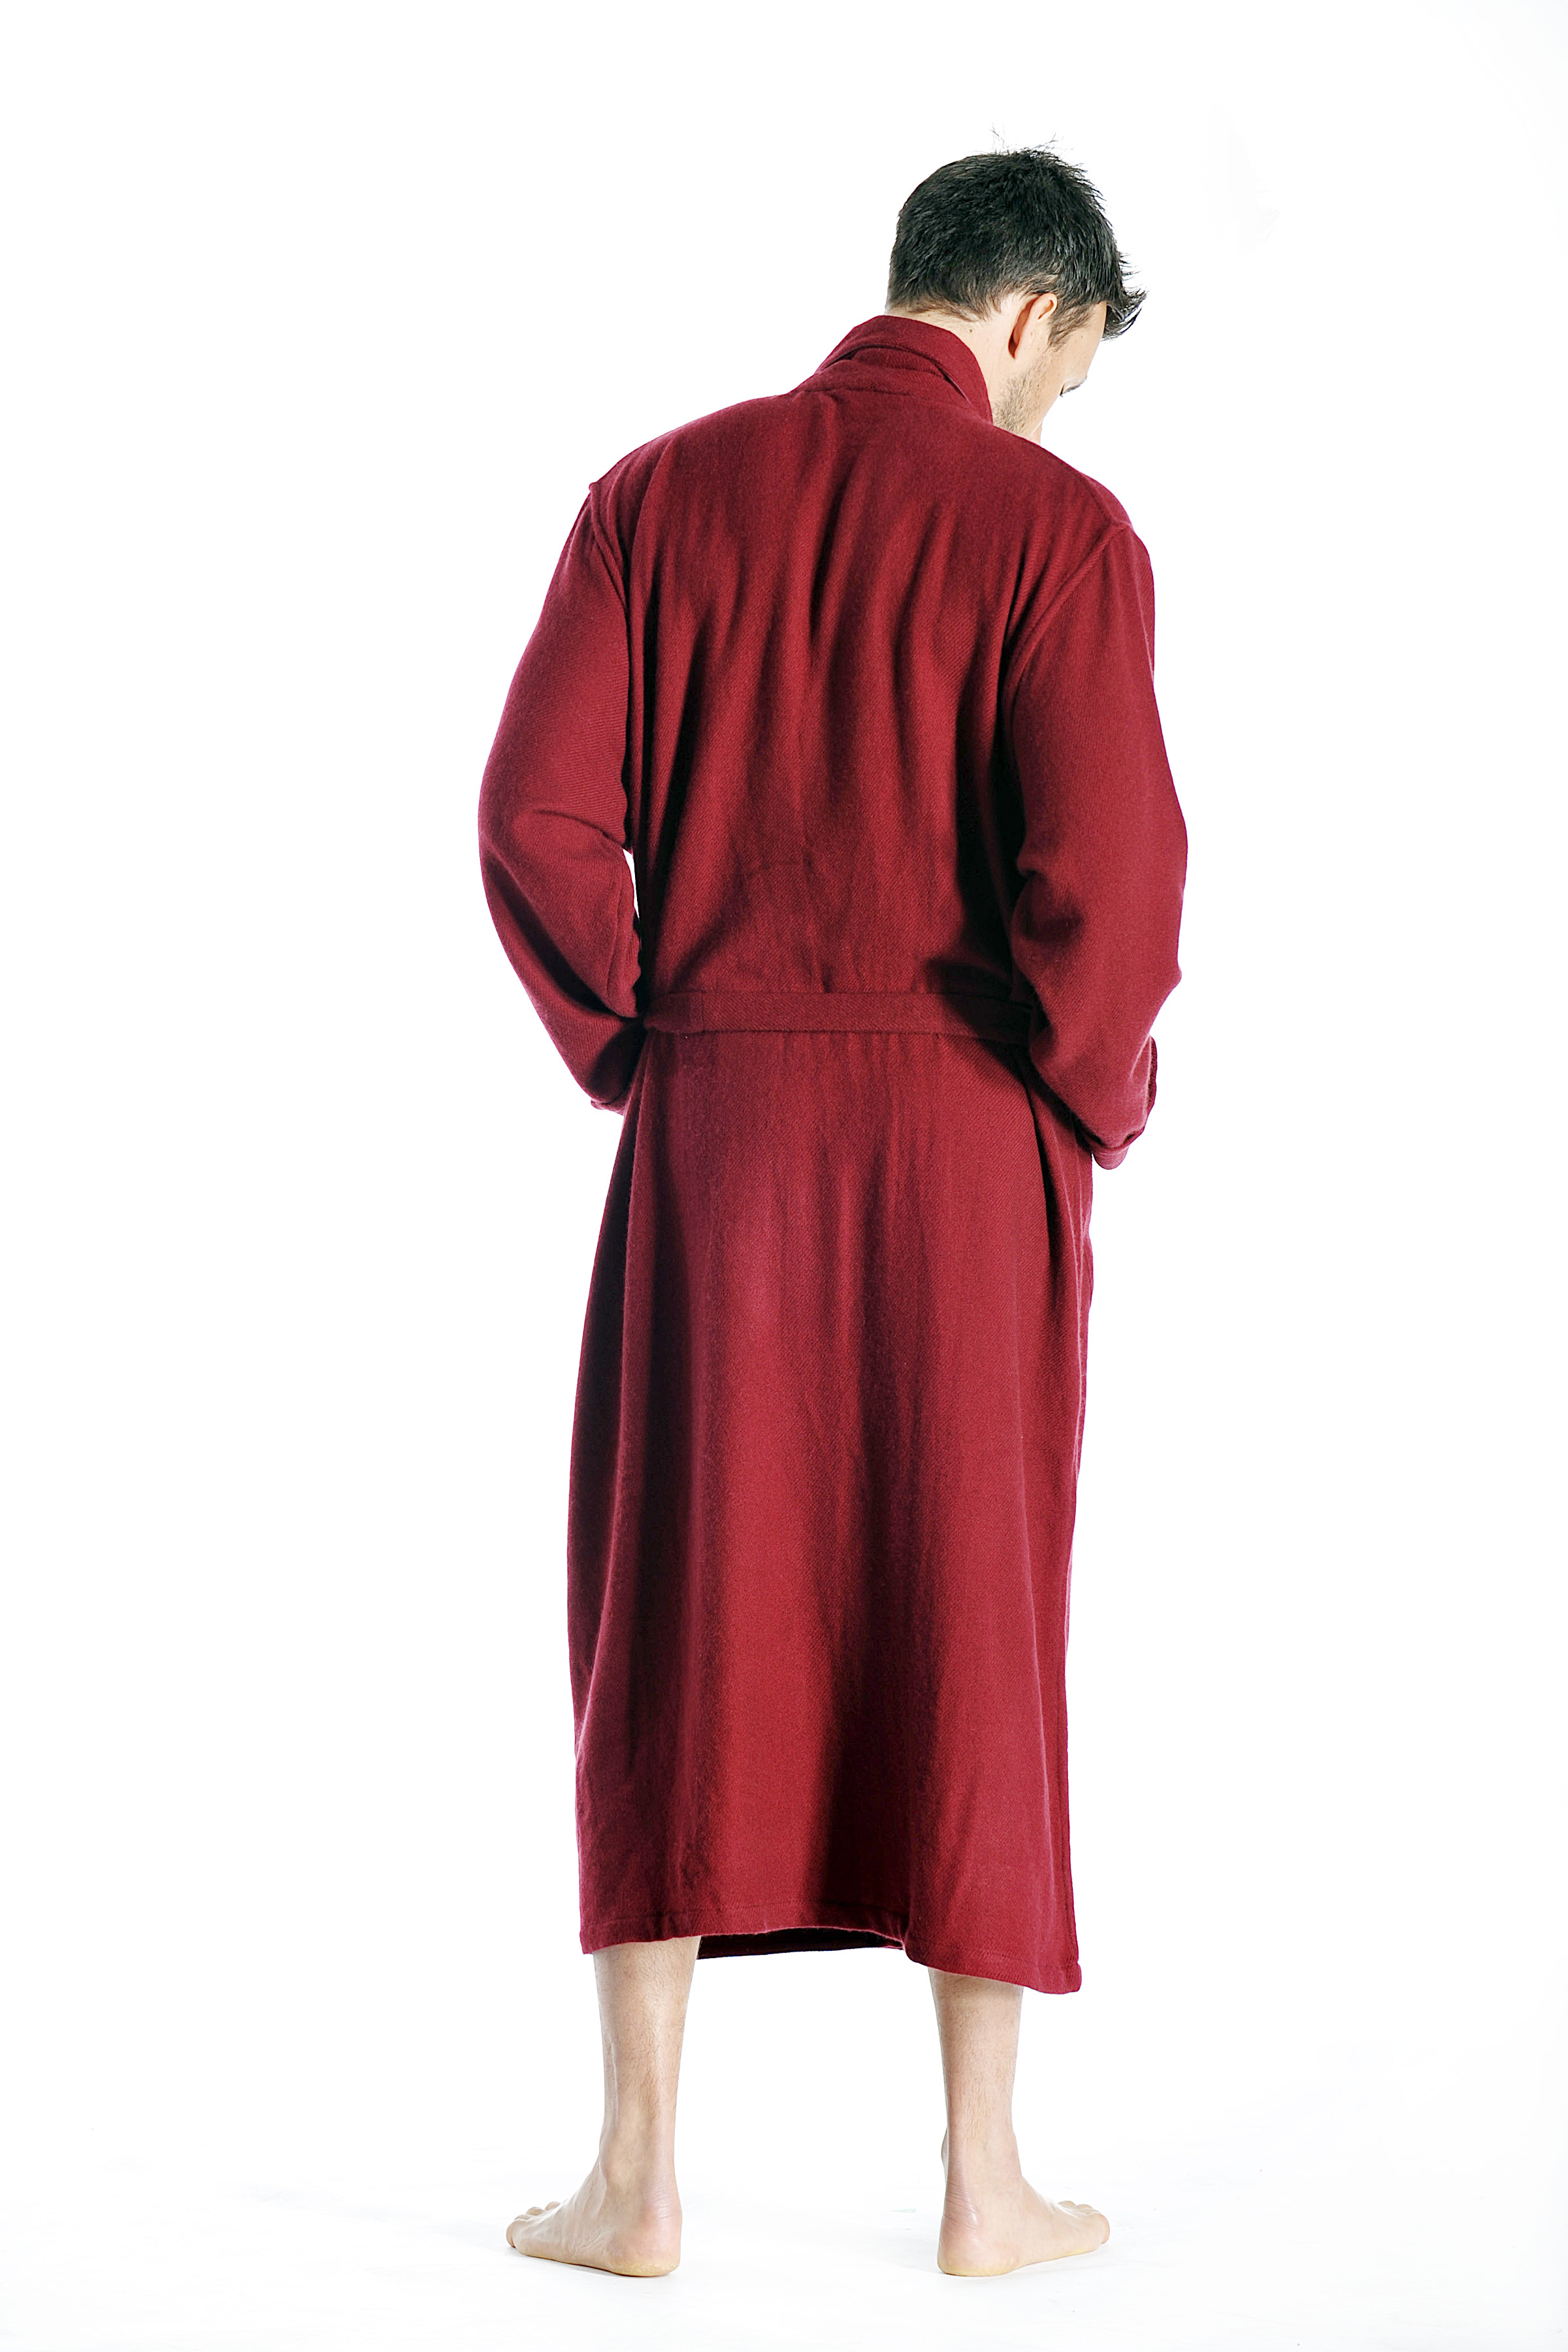 Pure Cashmere Full Length Robe for Men (Navy, Small/Medium)